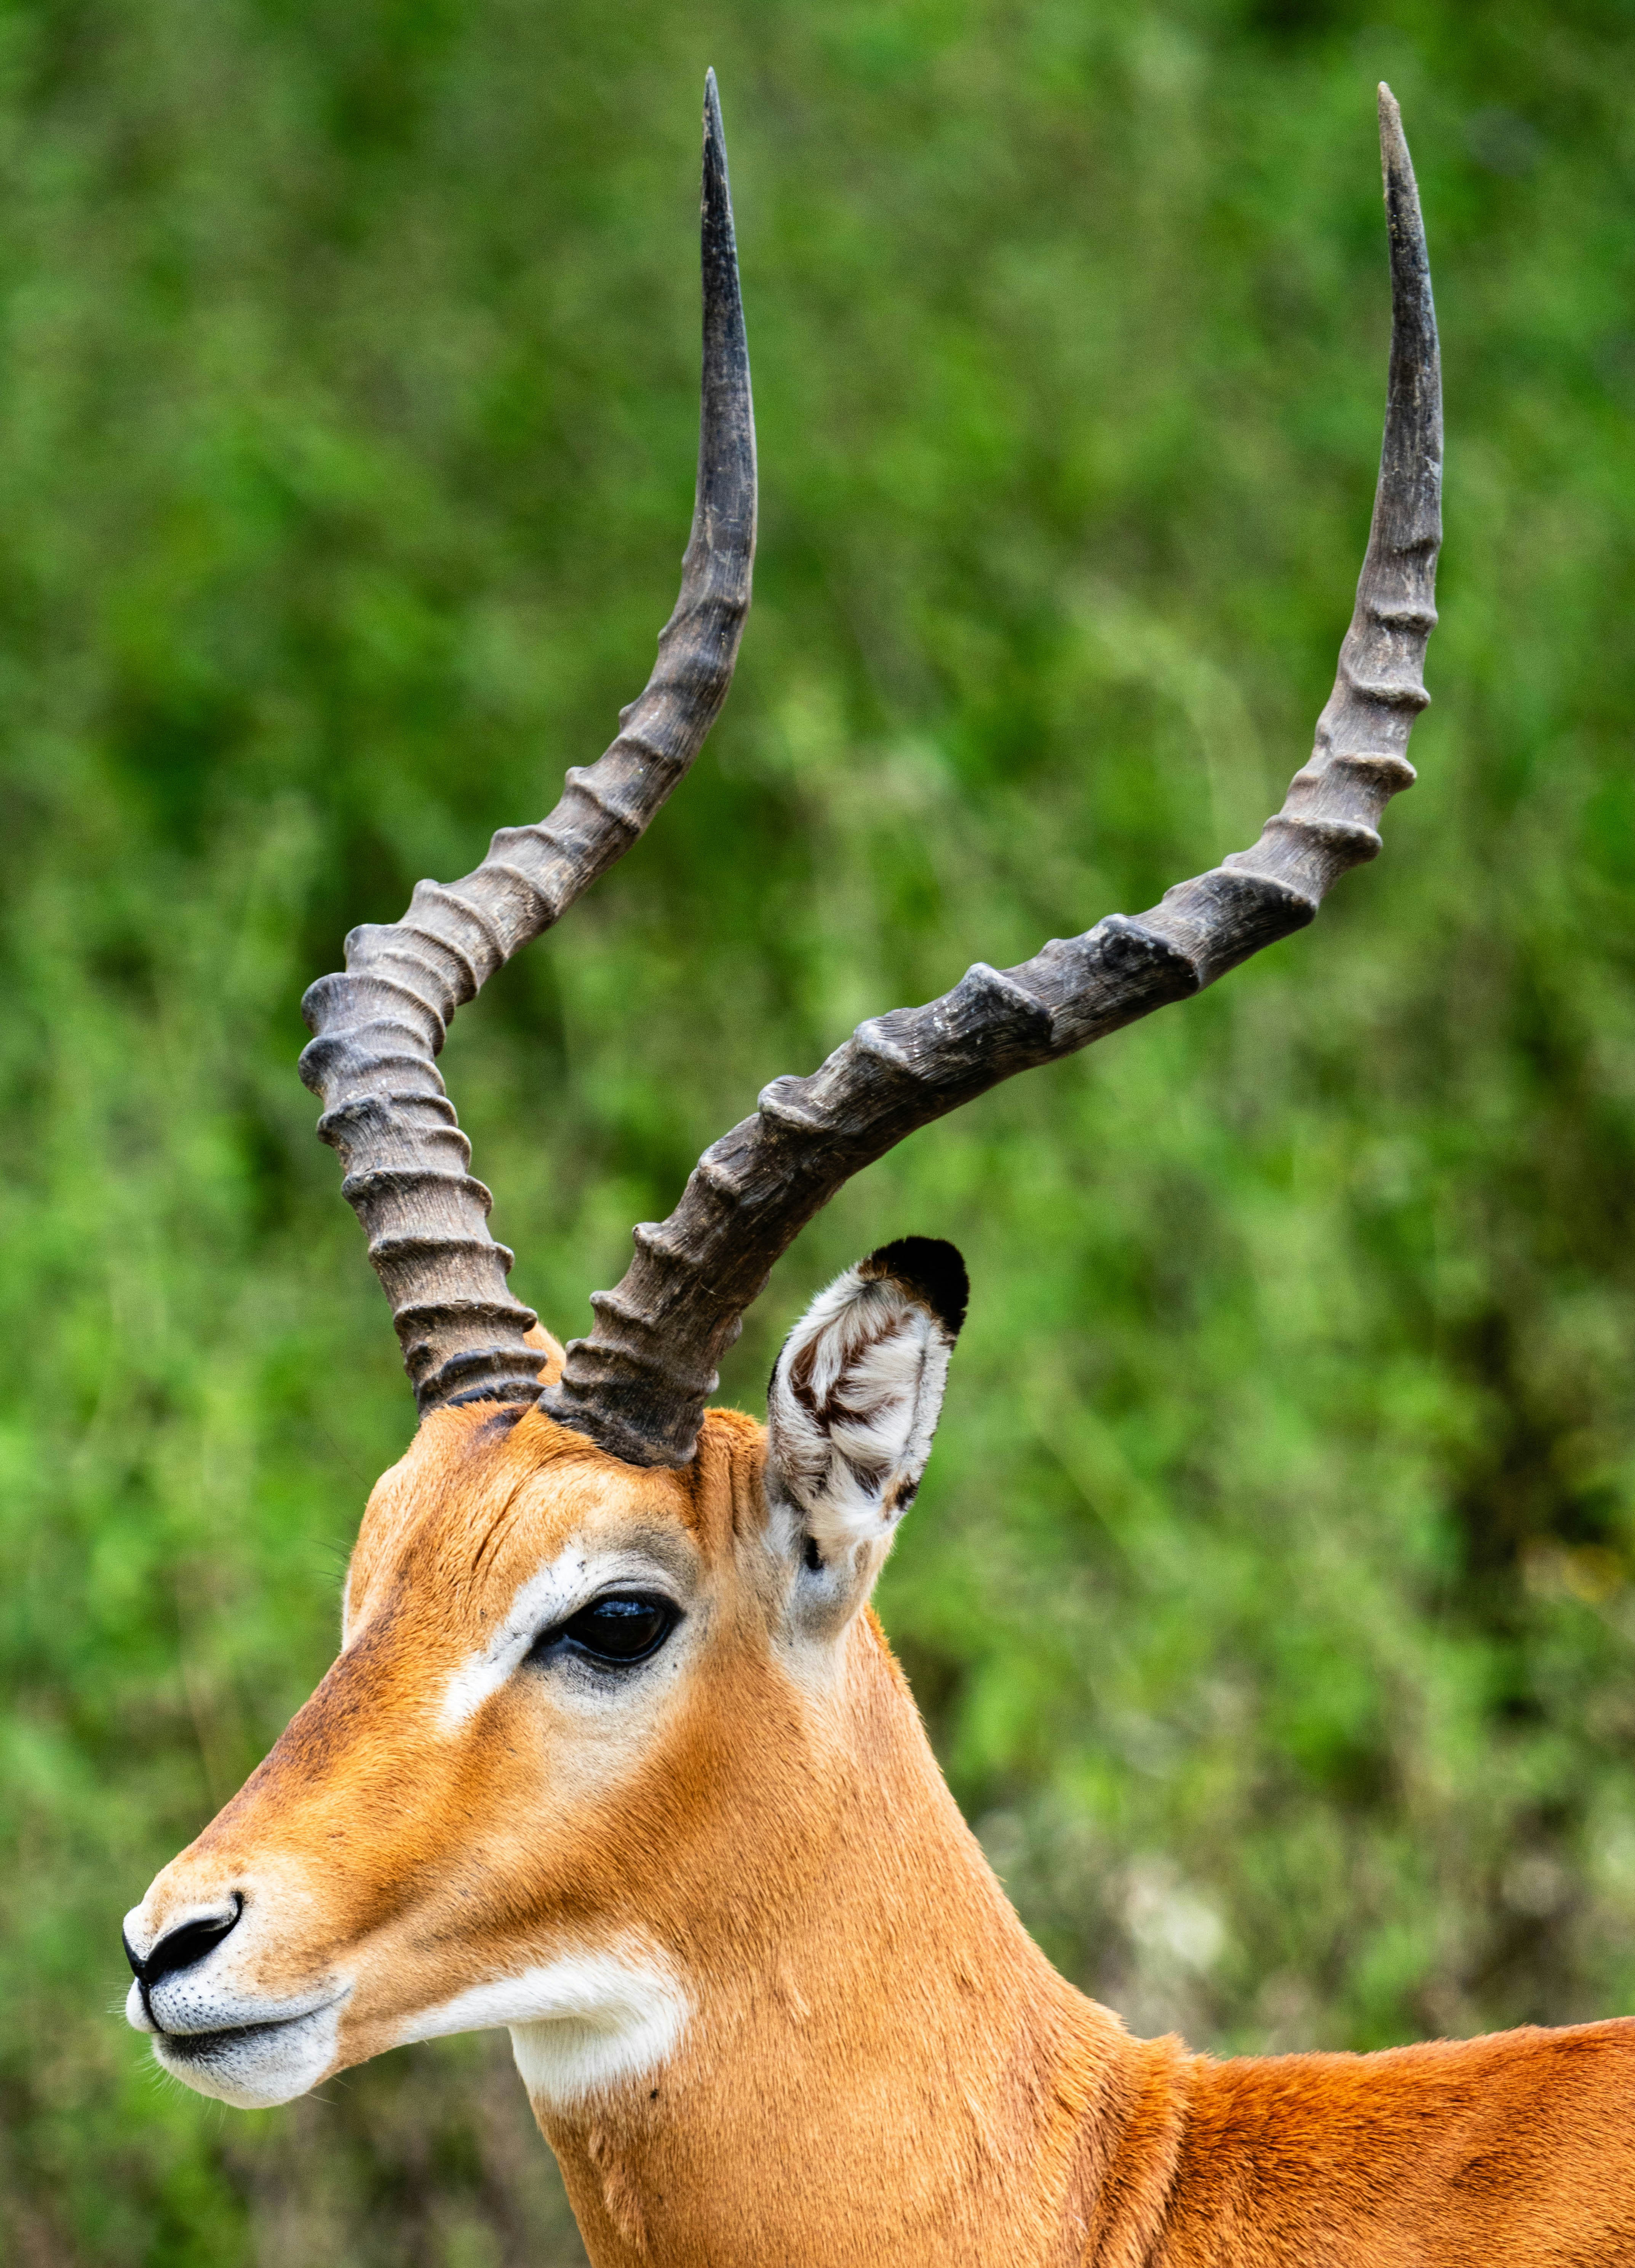 great photo recipe,how to photograph thomson's gazelle, serengeti, tanzania, africa. absolutely stunning!